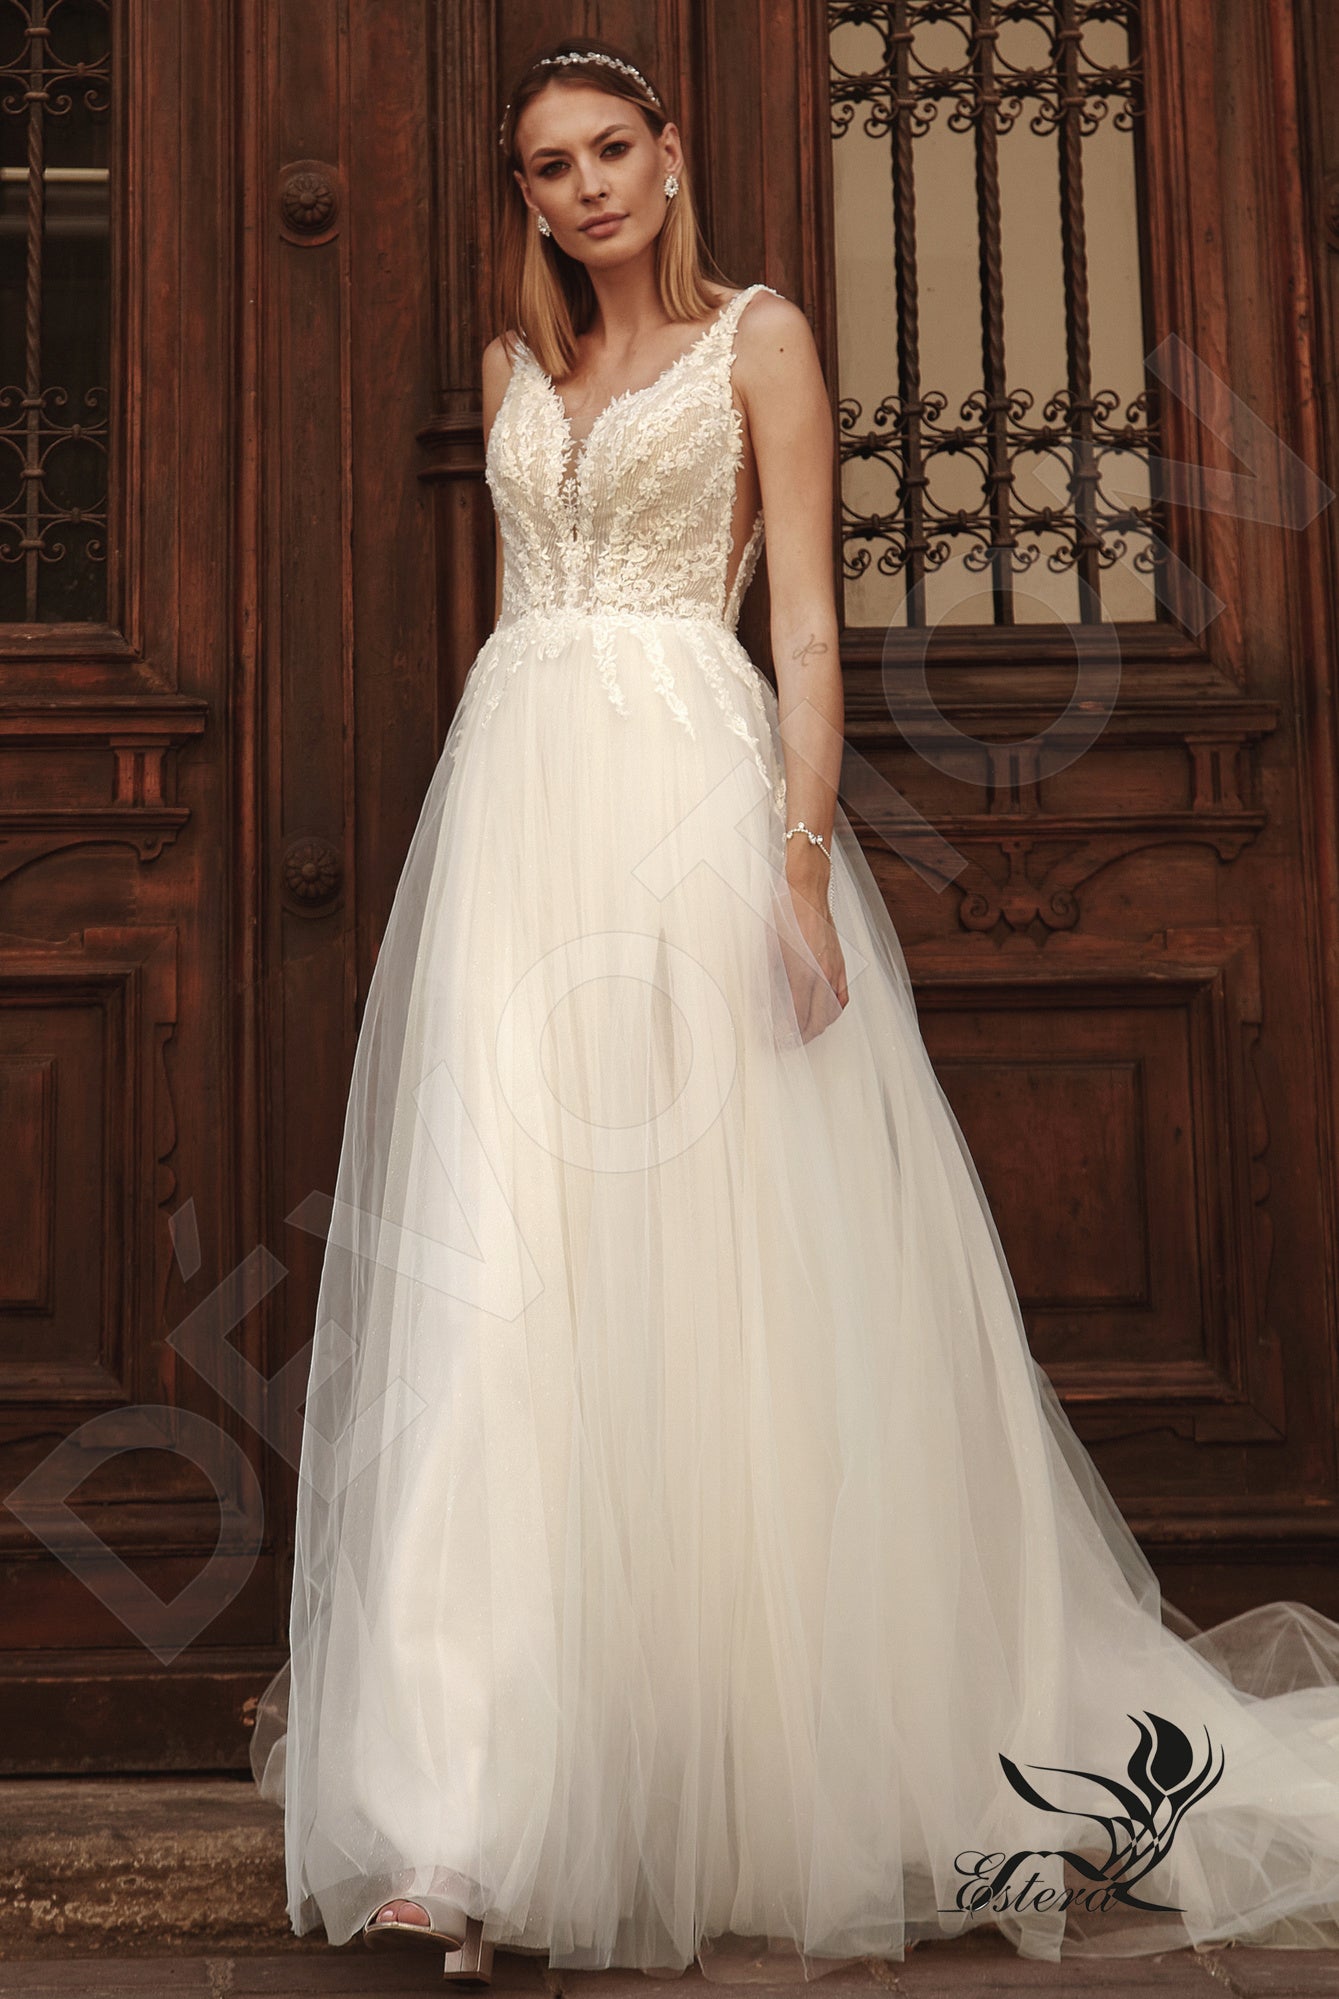 Chiara Open back A-line Sleeveless Wedding Dress Front